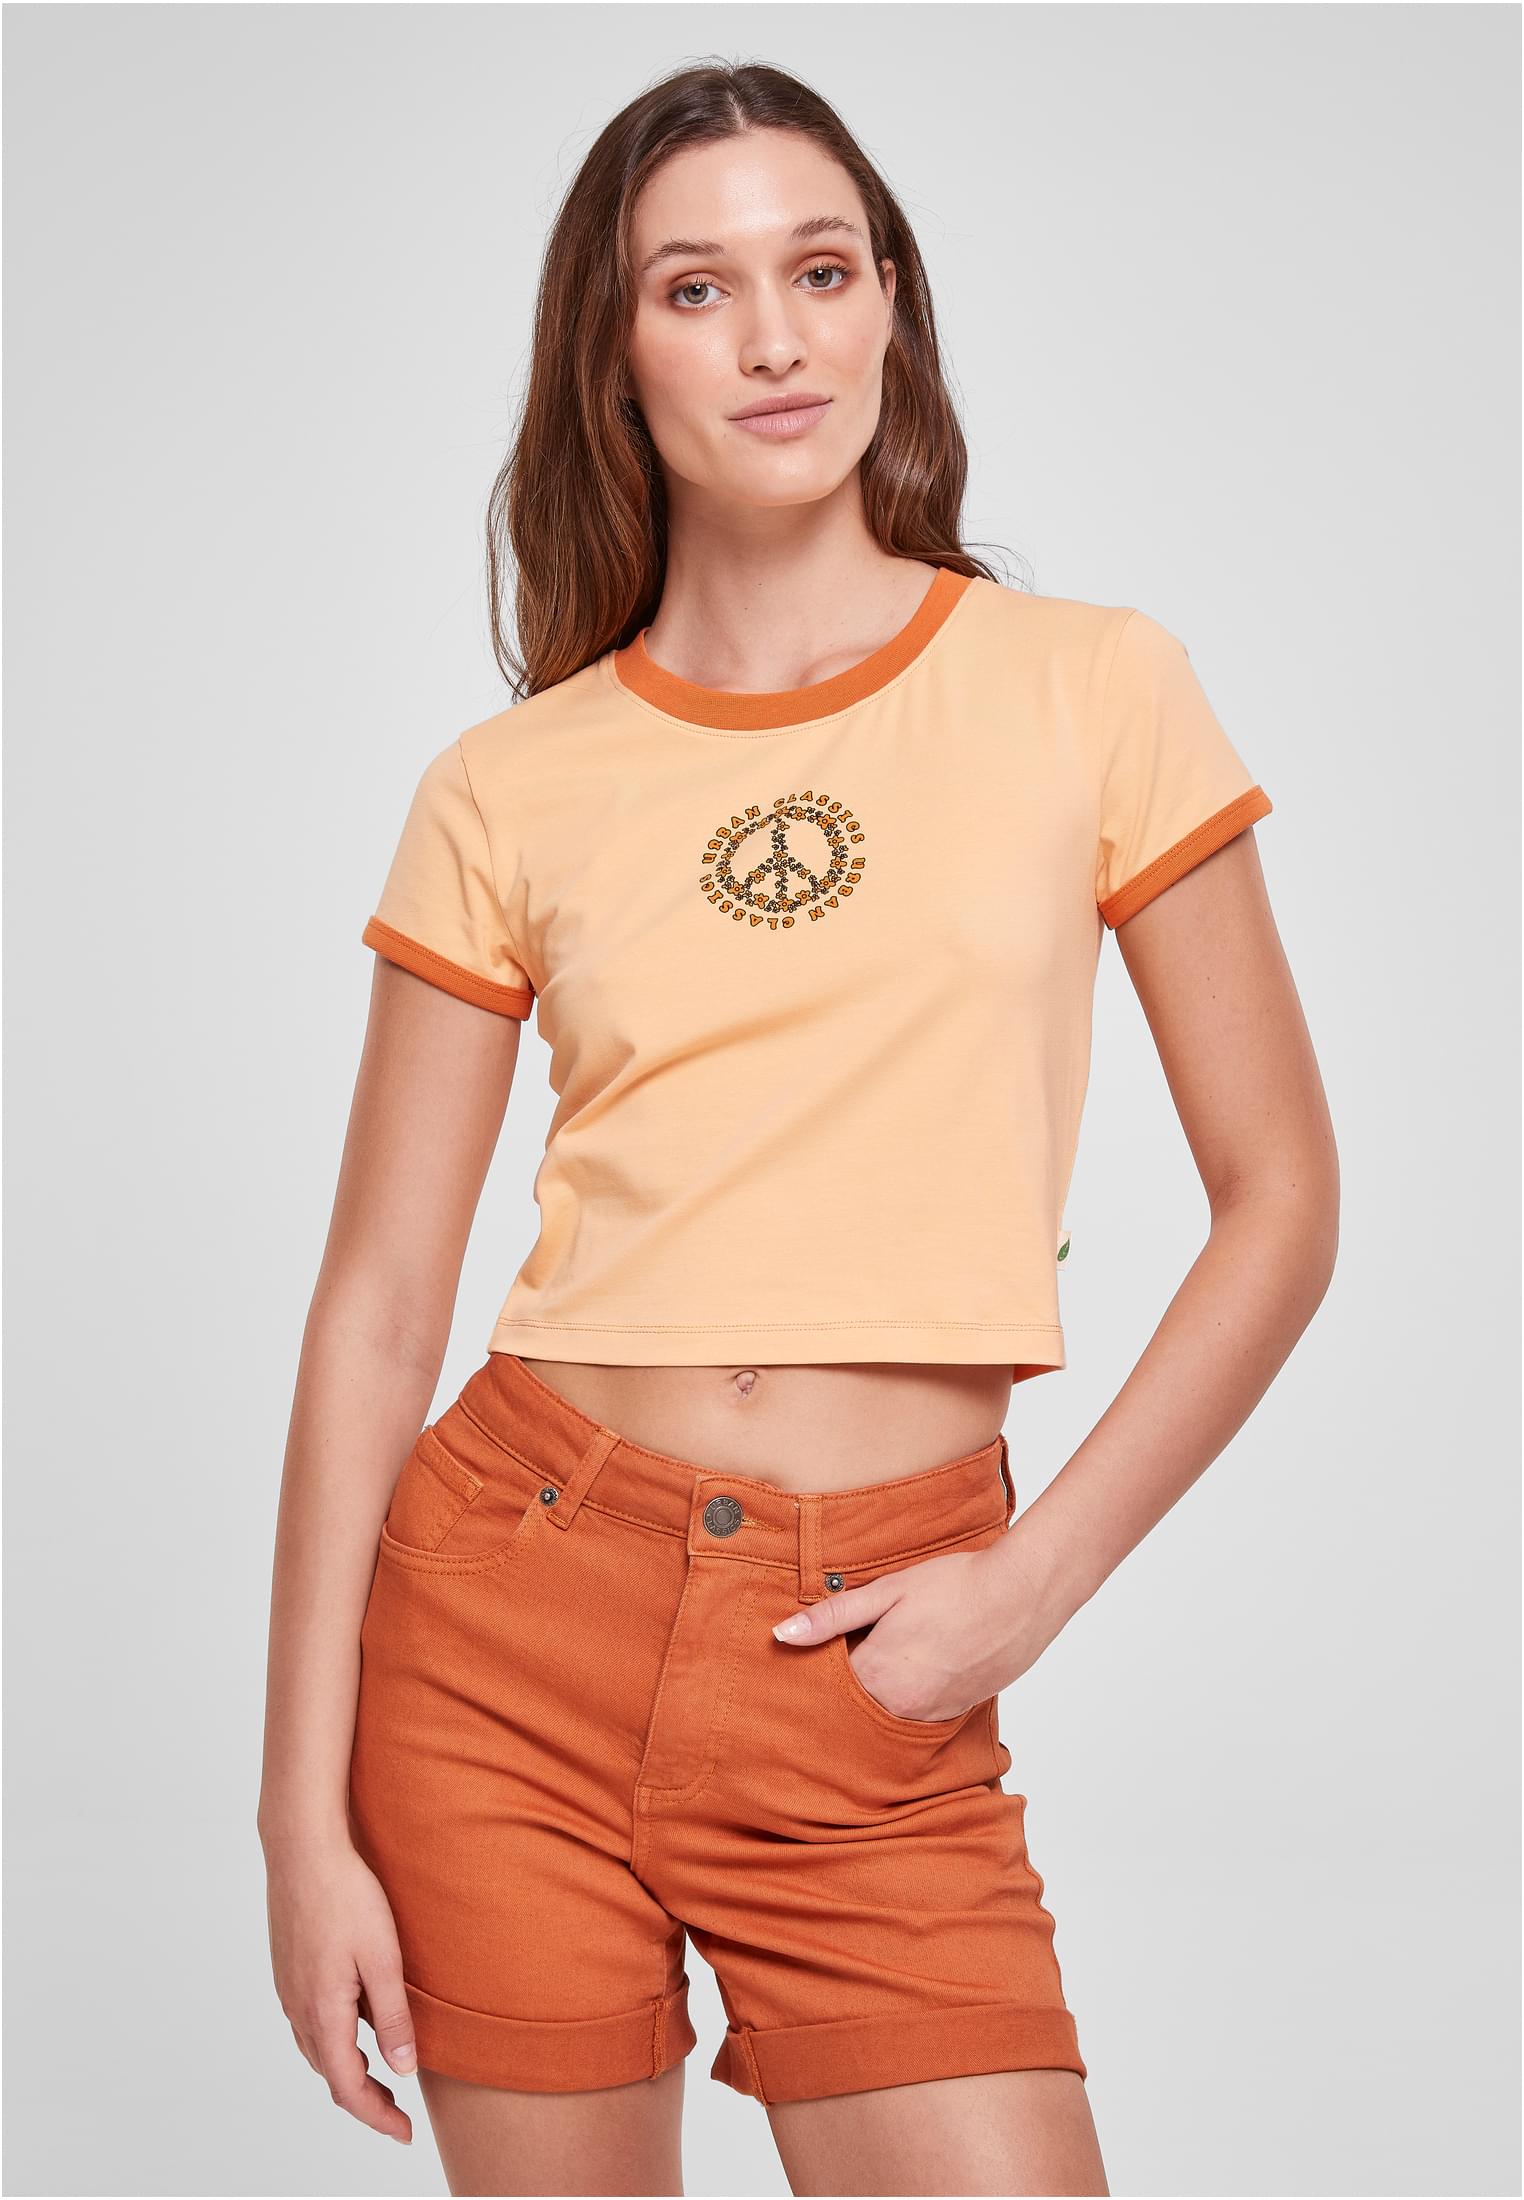 Women's Stretch Cropped Tee Jersey Paleo Orange/Vintageo Orange